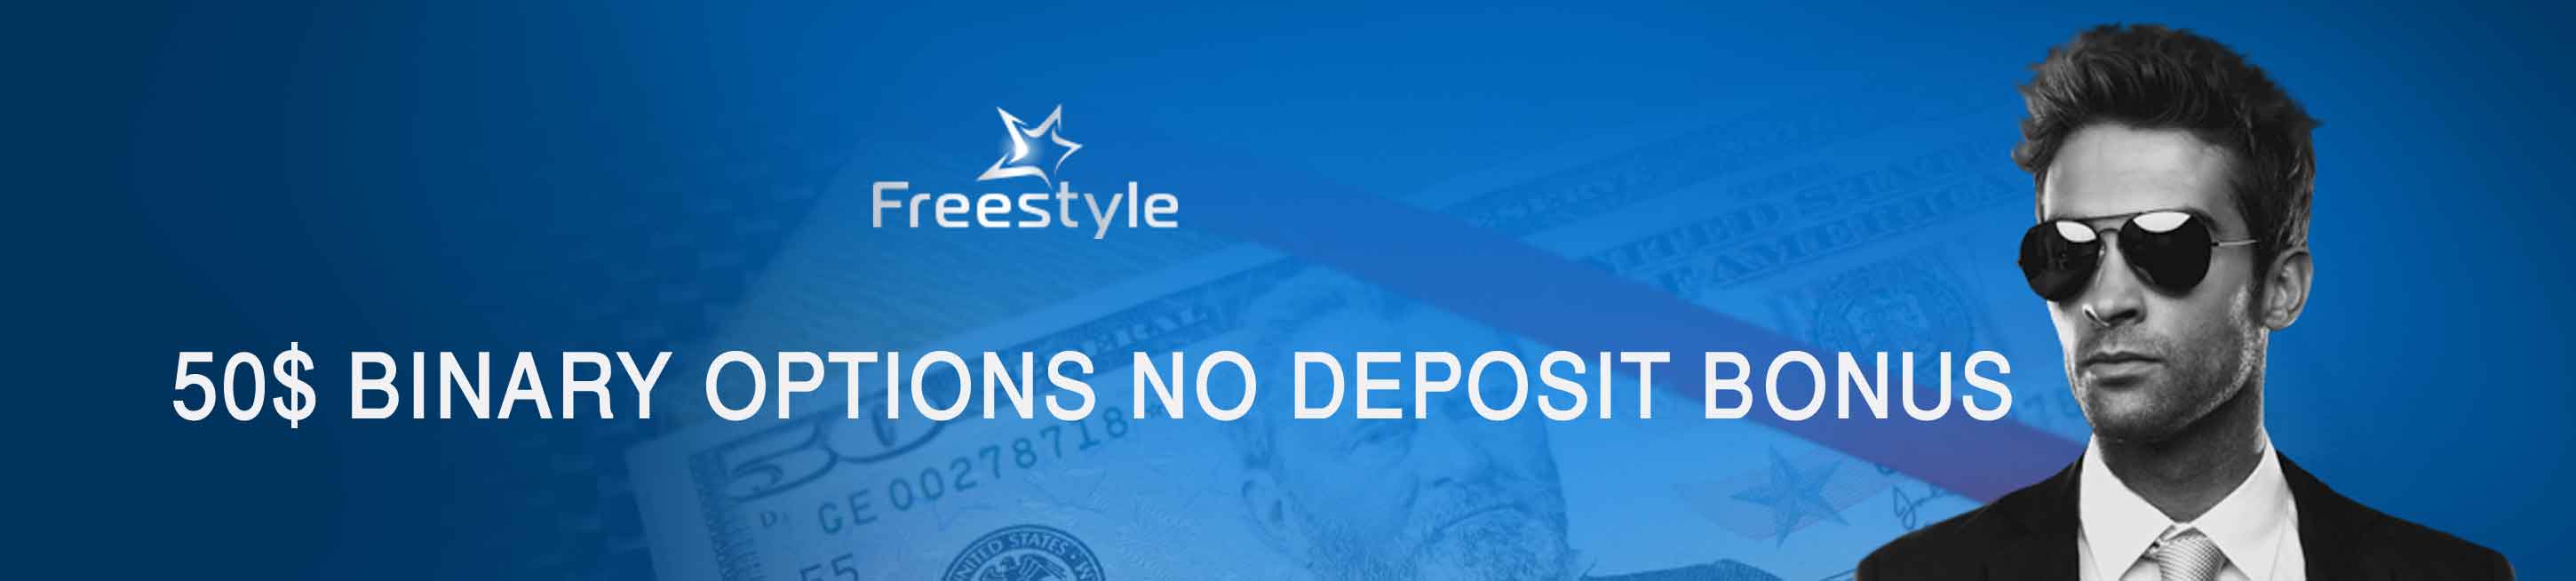 freestyle options no deposit bonus